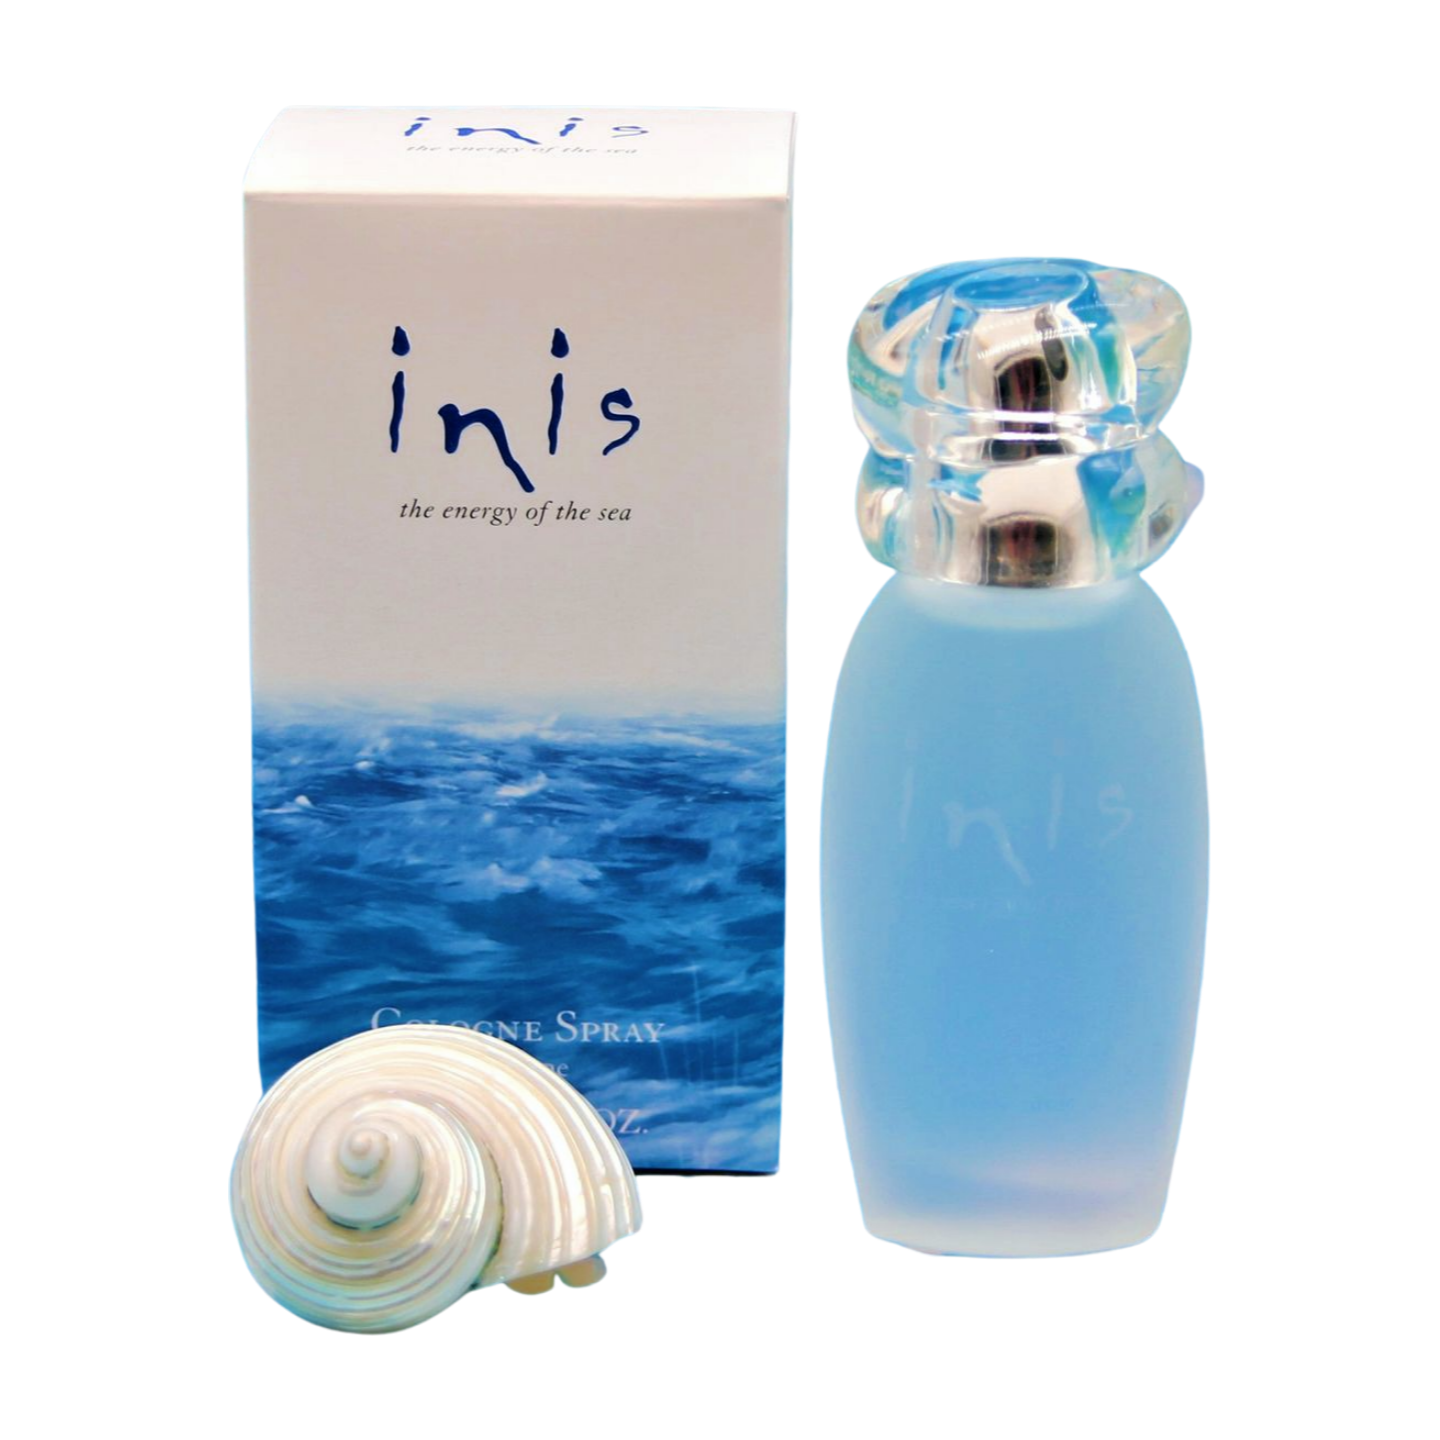 inis - Cologne Spray 50 ml